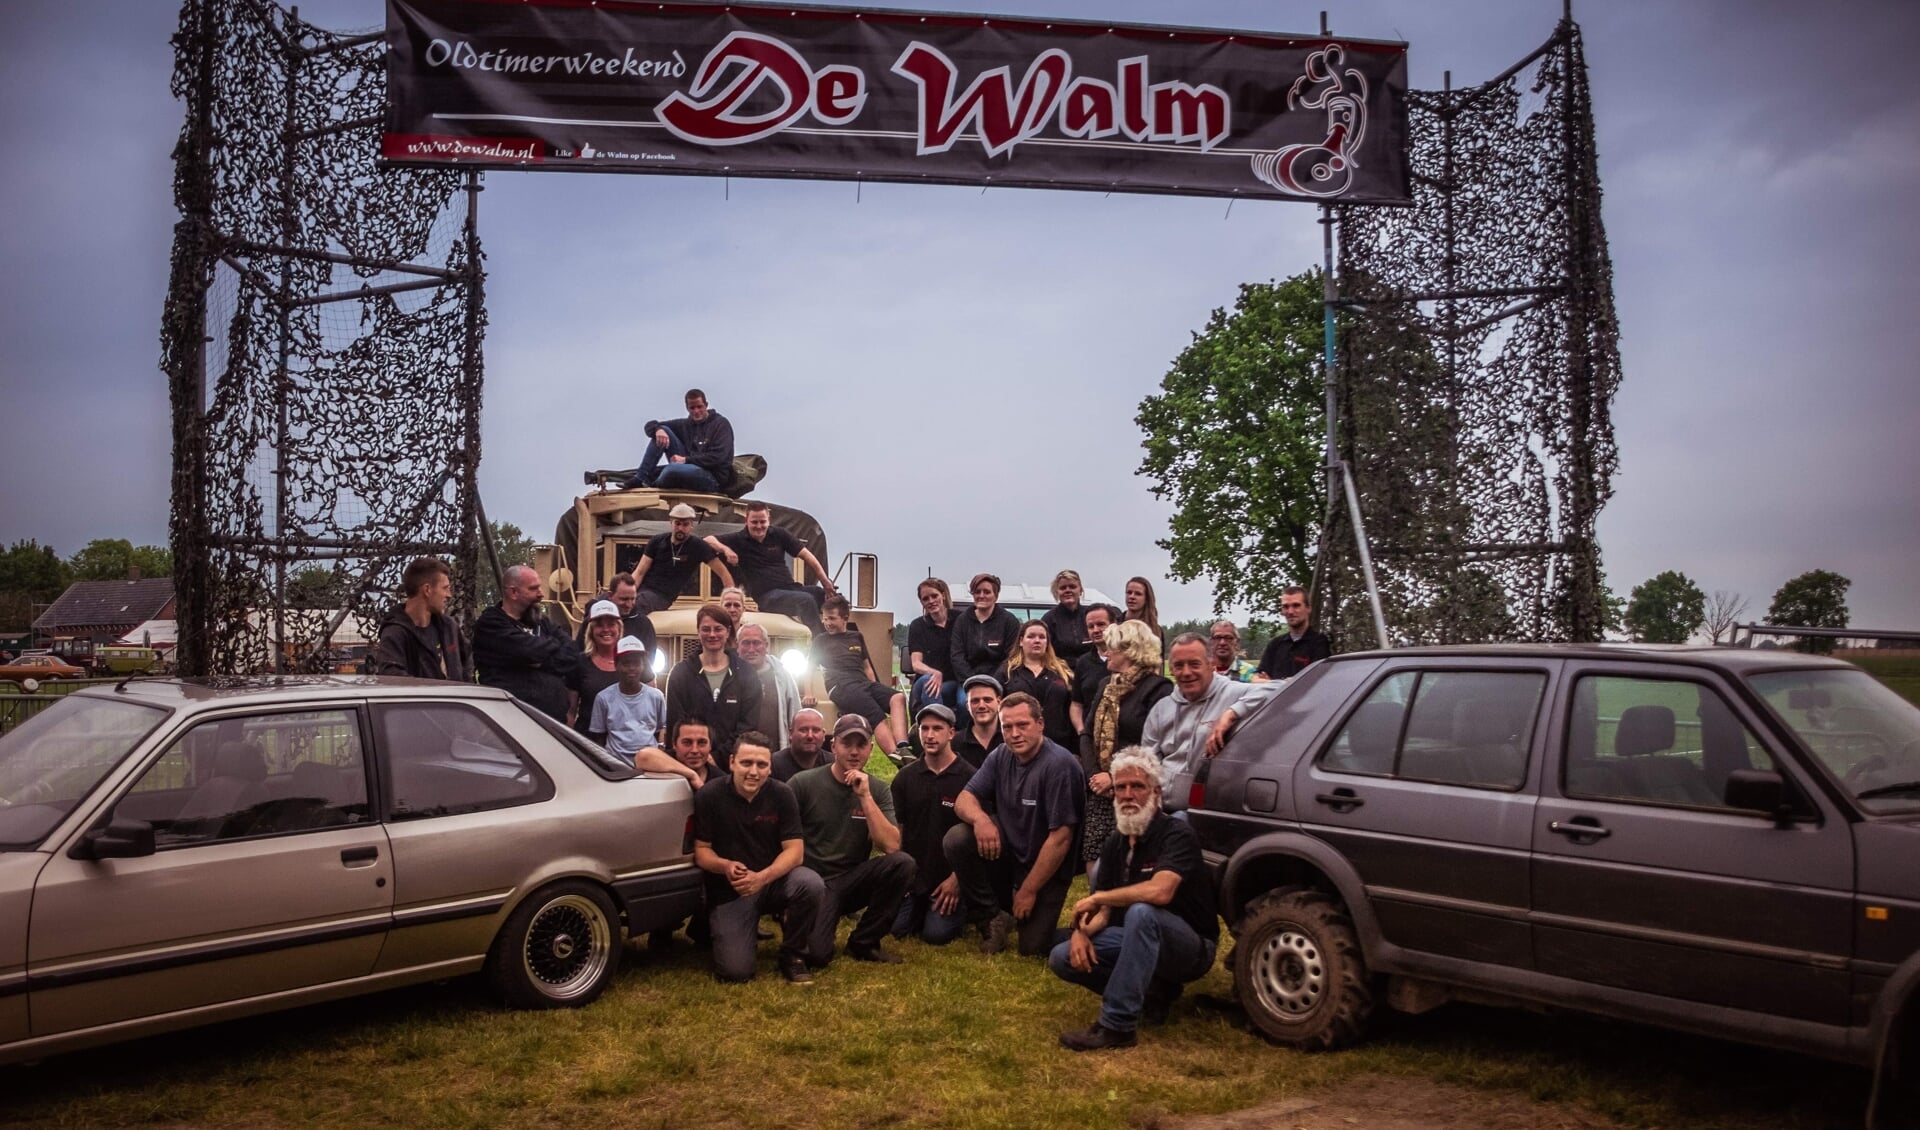 De vrijwilligers van De Walm vormen één grote vriendengroep. FOTO DE WALM  